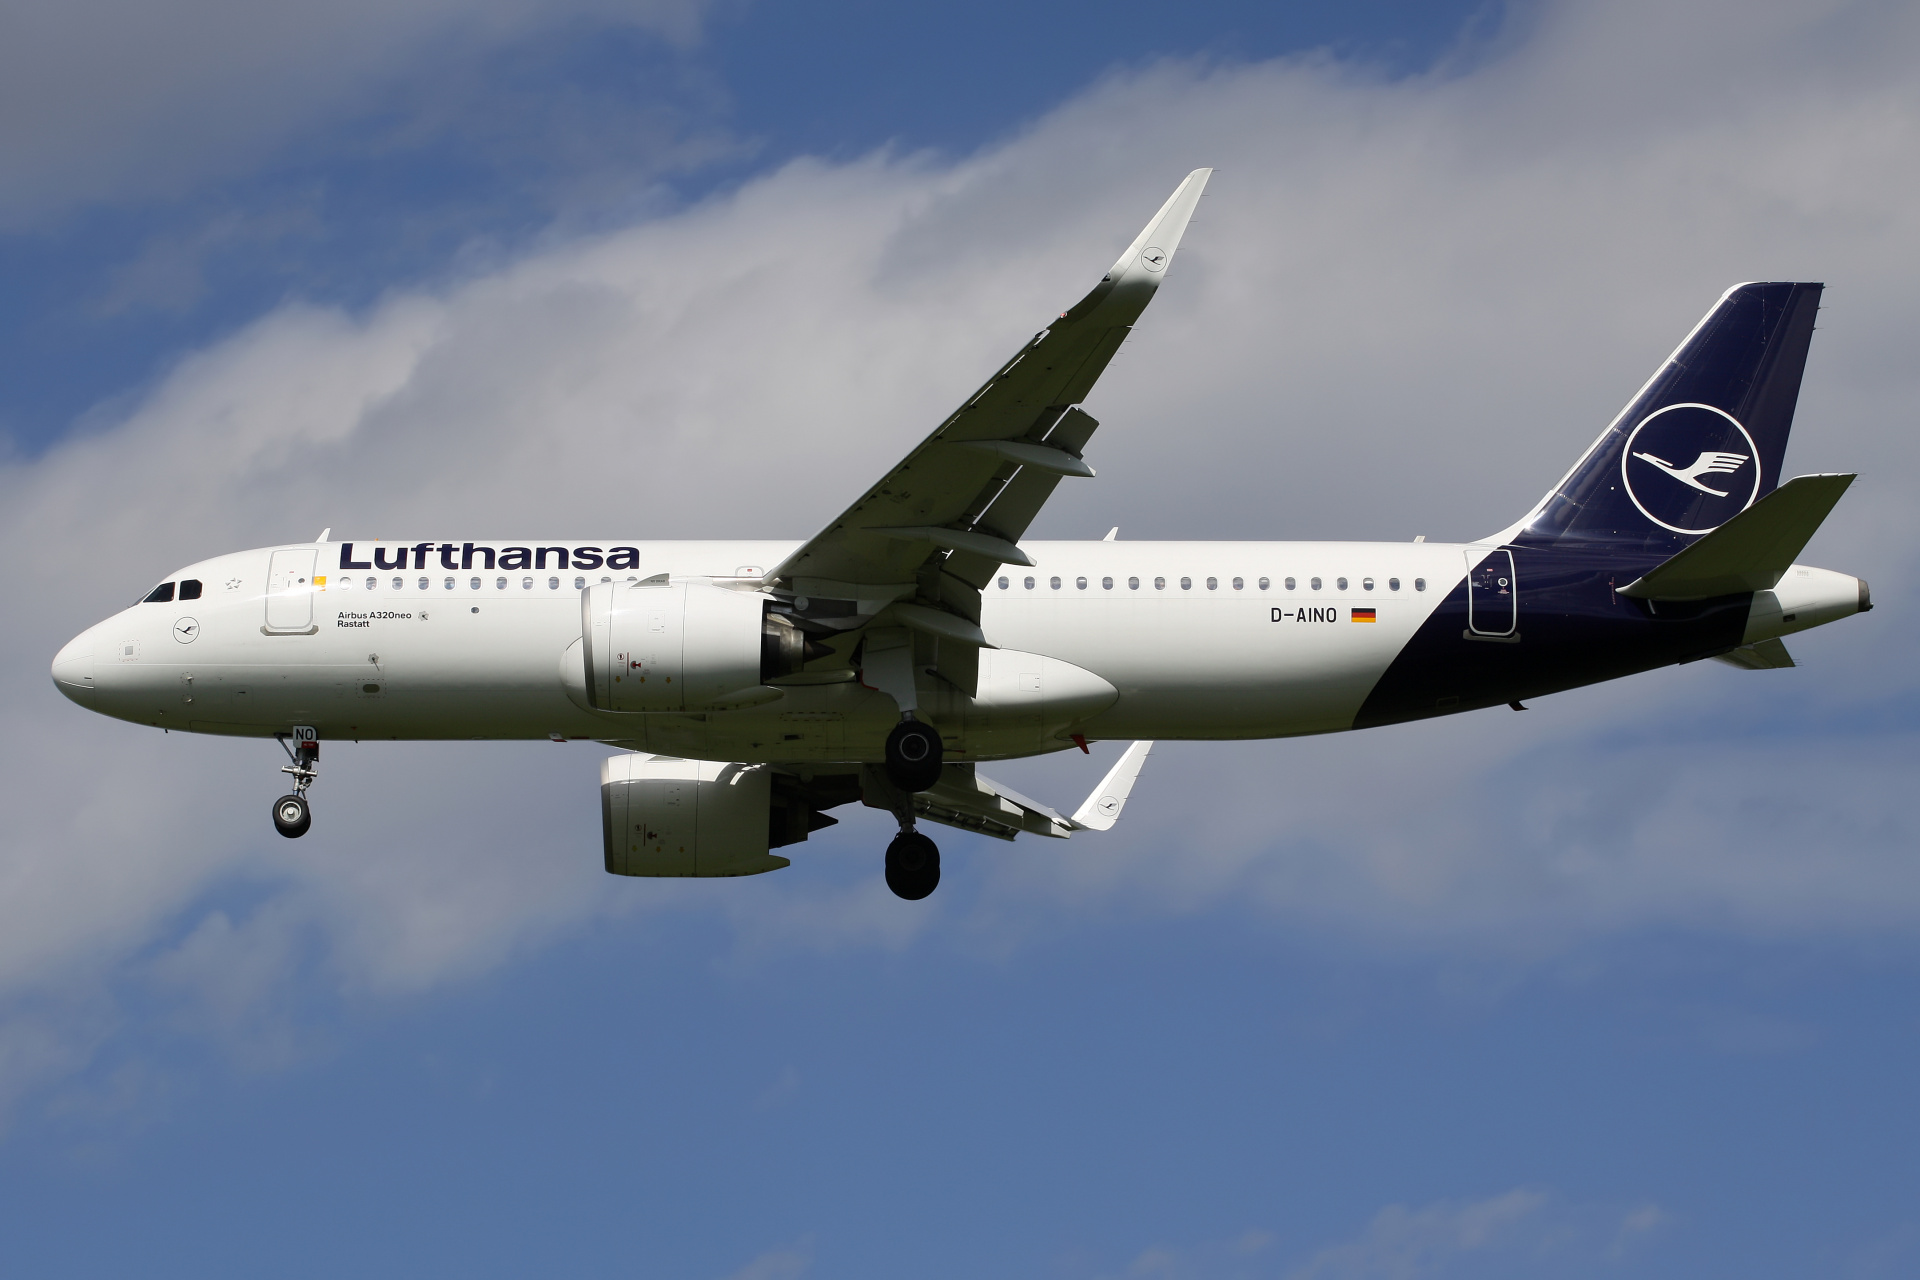 D-AINO (Aircraft » EPWA Spotting » Airbus A320neo » Lufthansa)